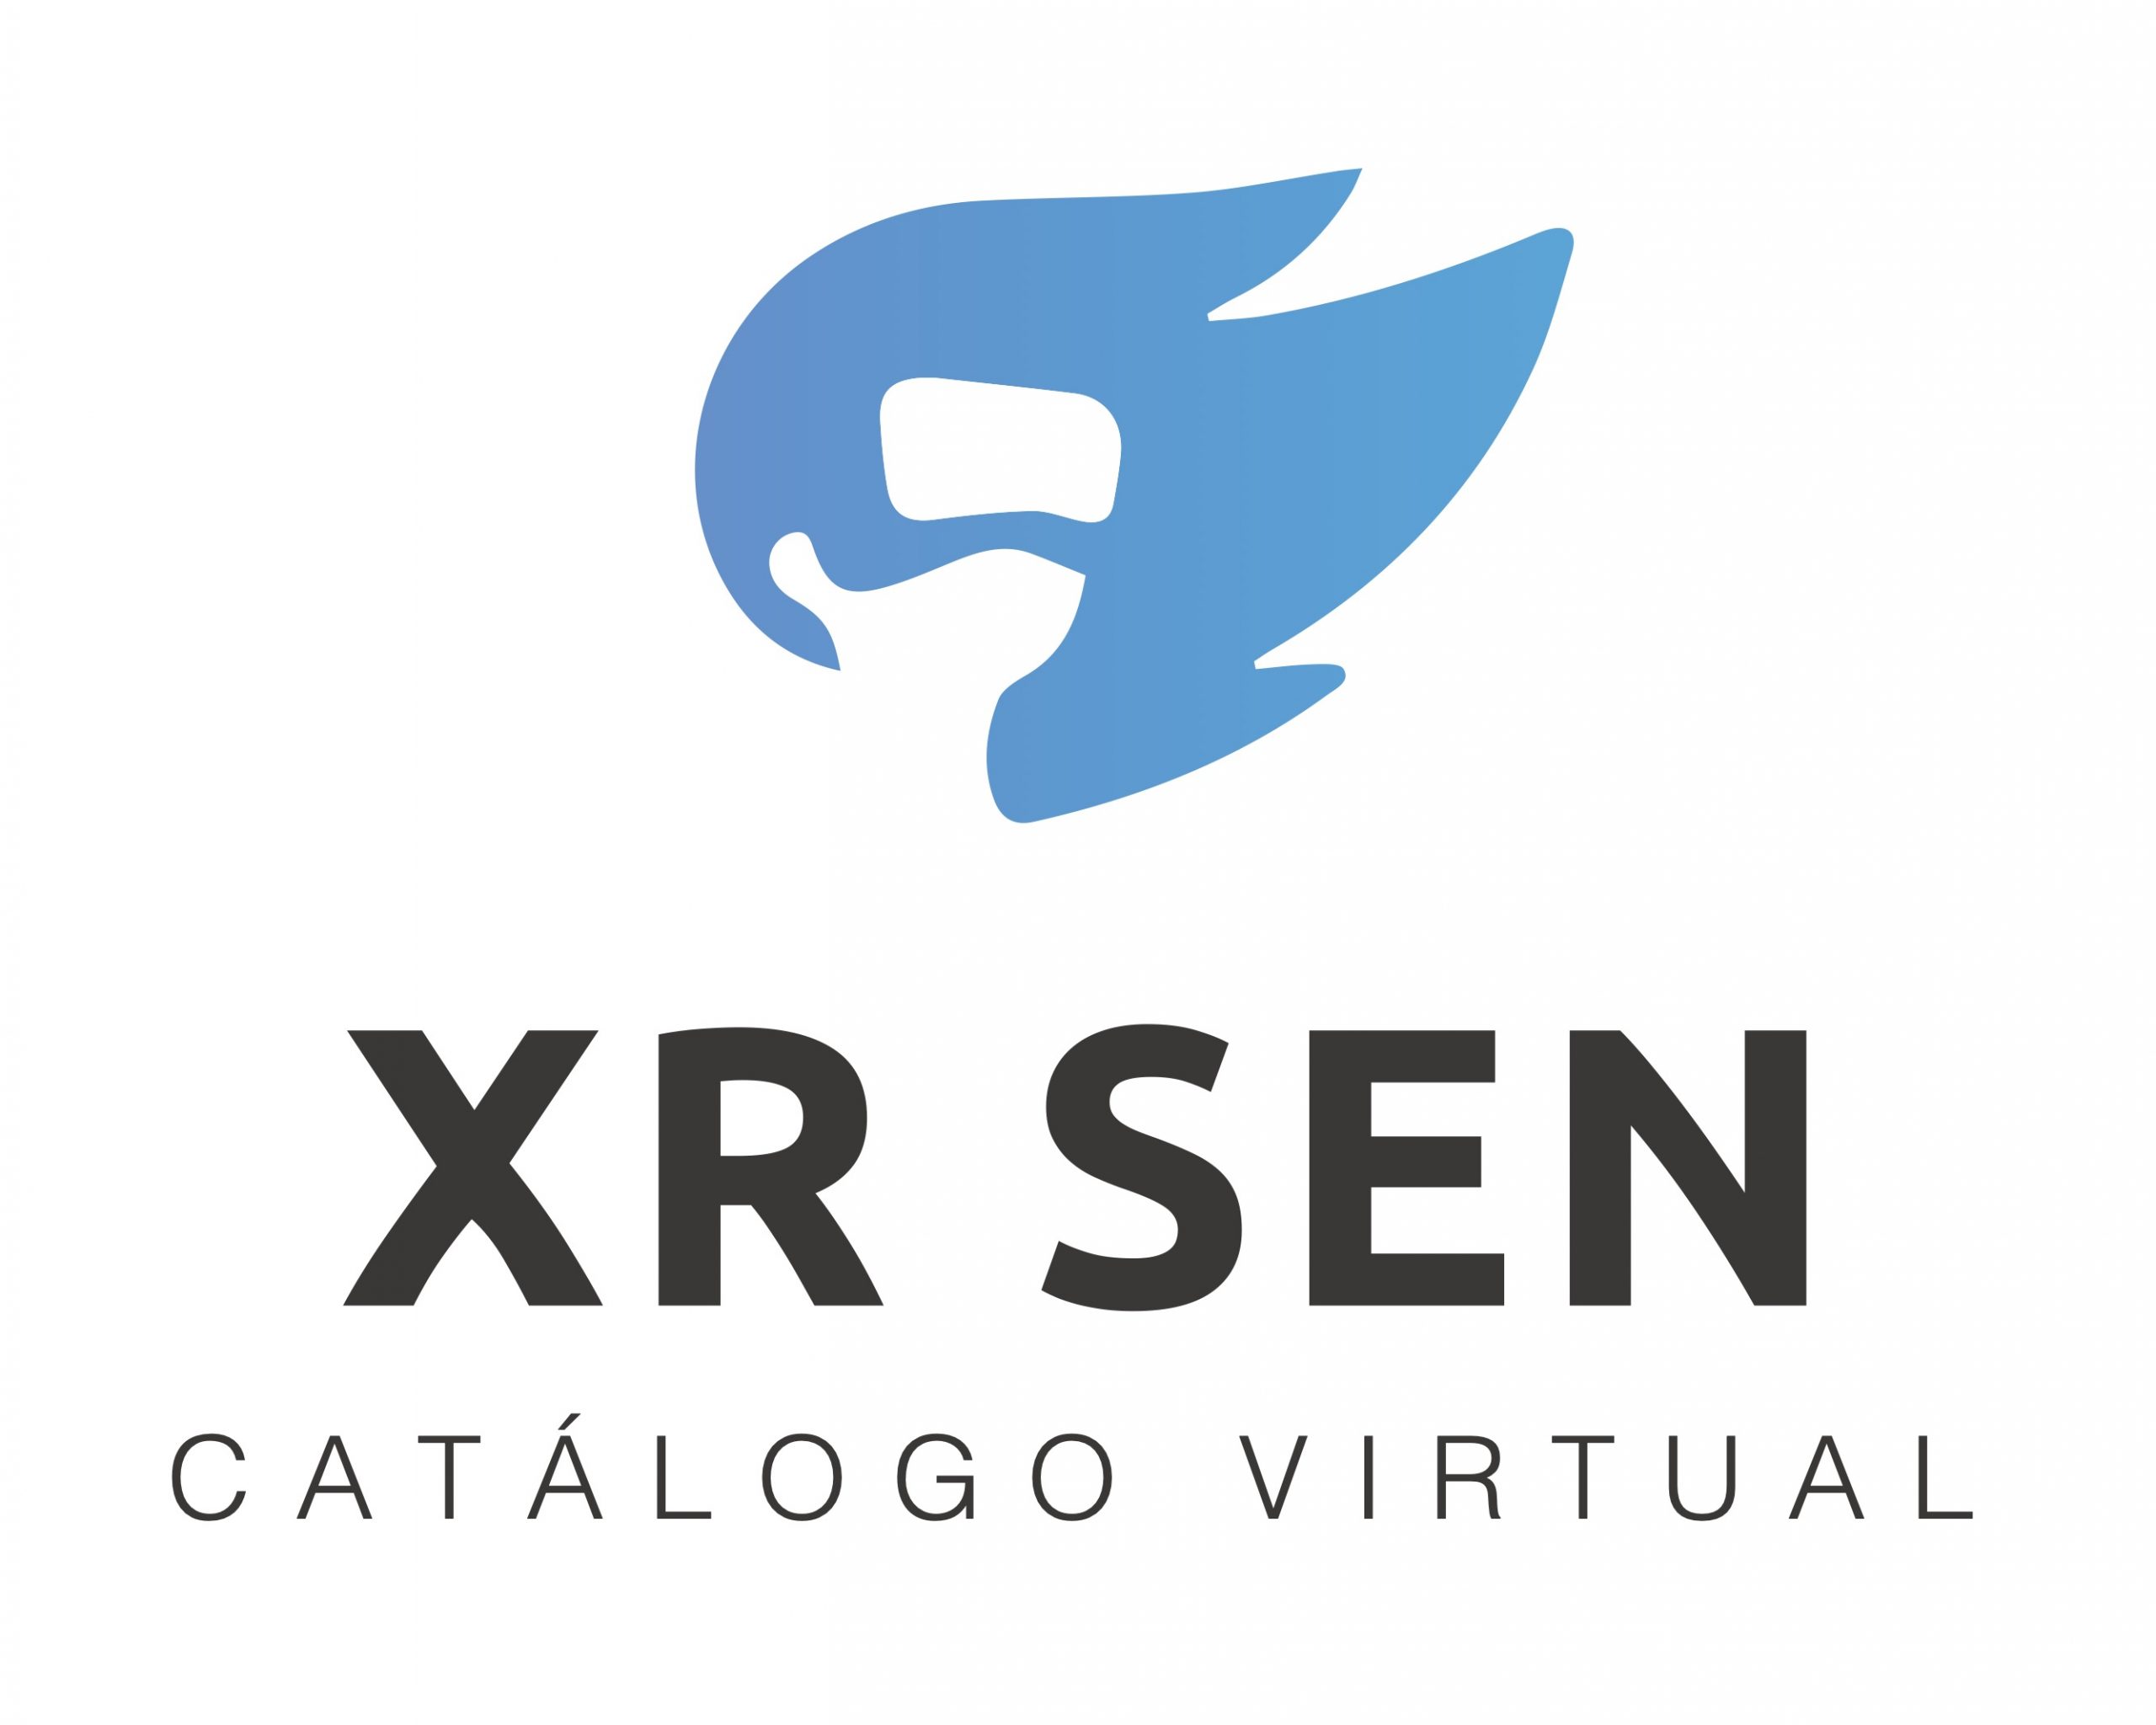 XRSEN – Catálogo Virtual